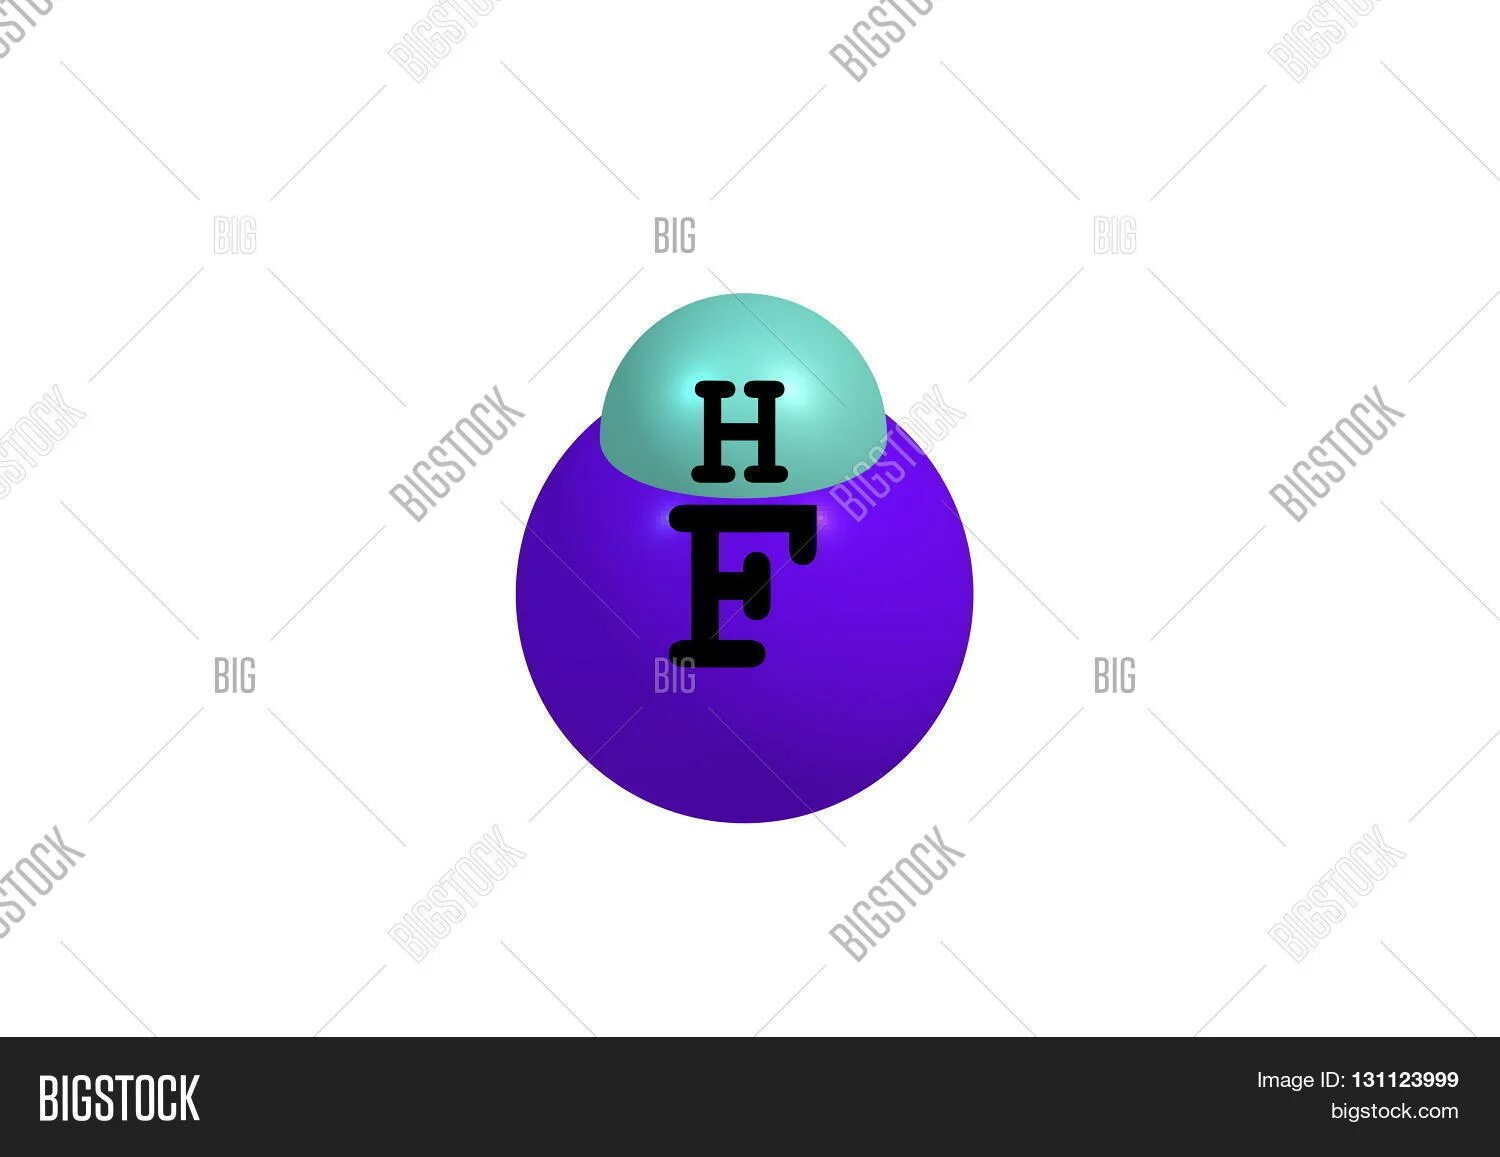 Фтор фтороводород. Молекула HF. Молекула фтороводорода. HF фтороводород. Фтористый водород формула.